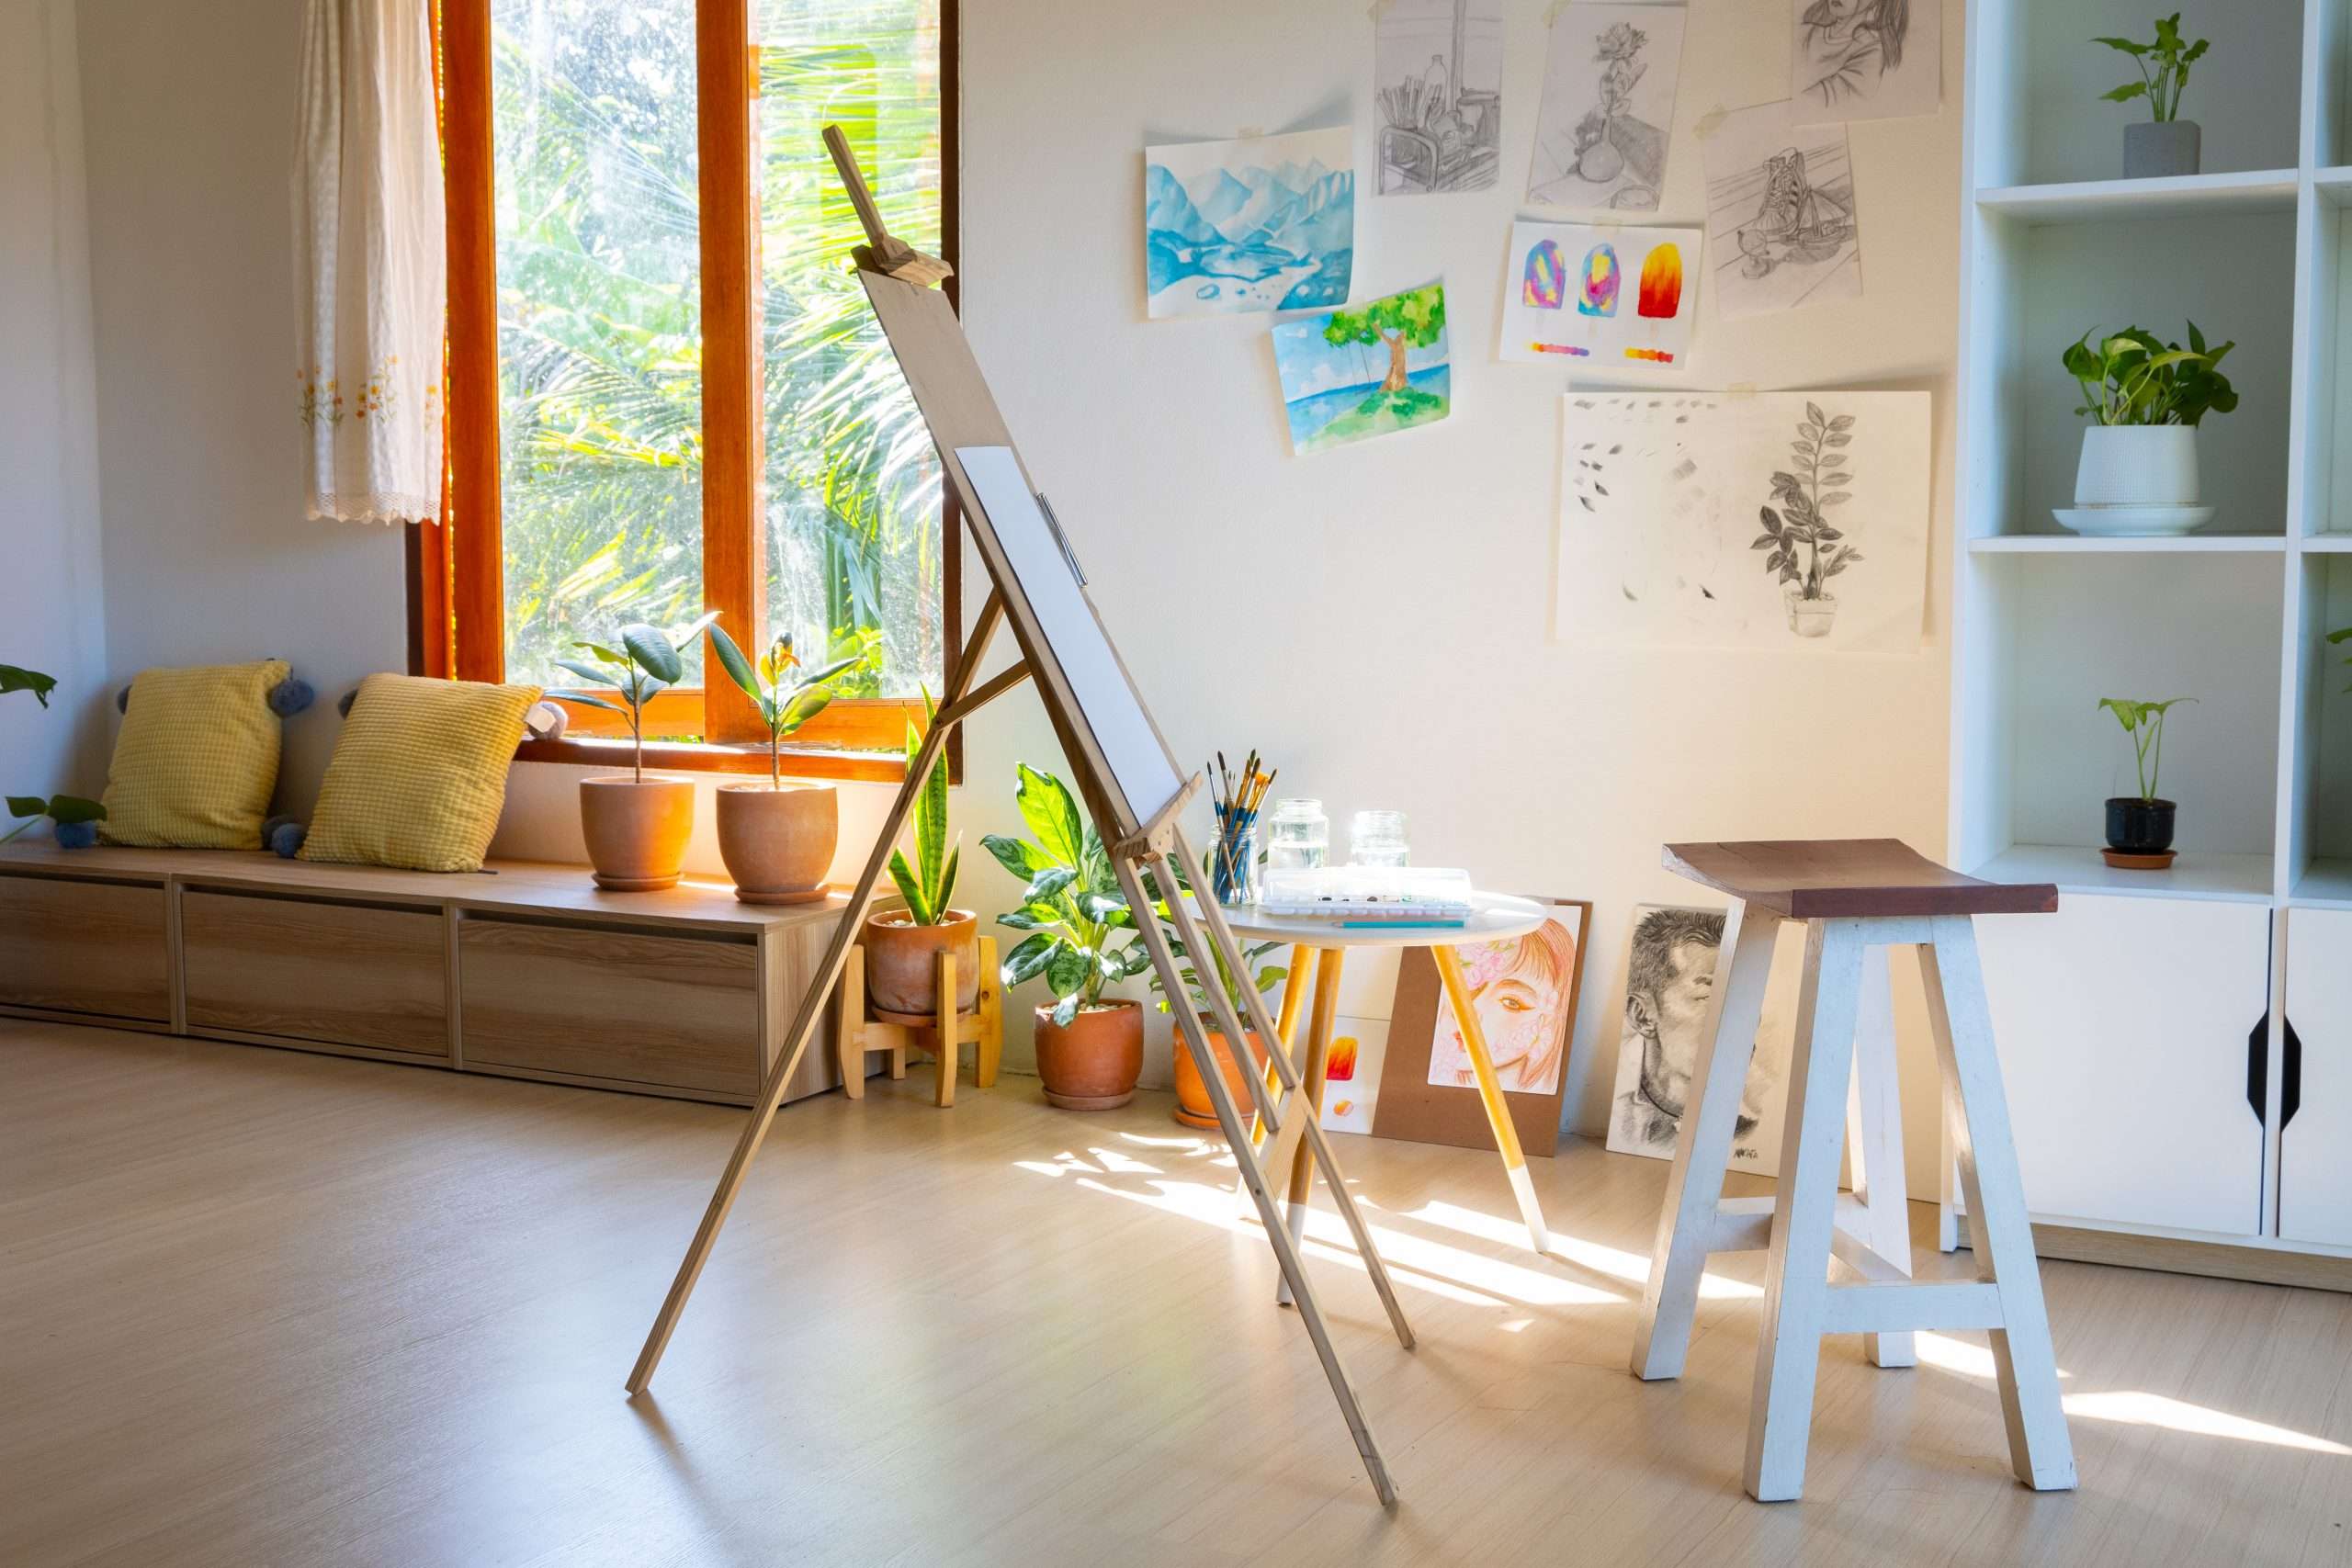 Art studio at home